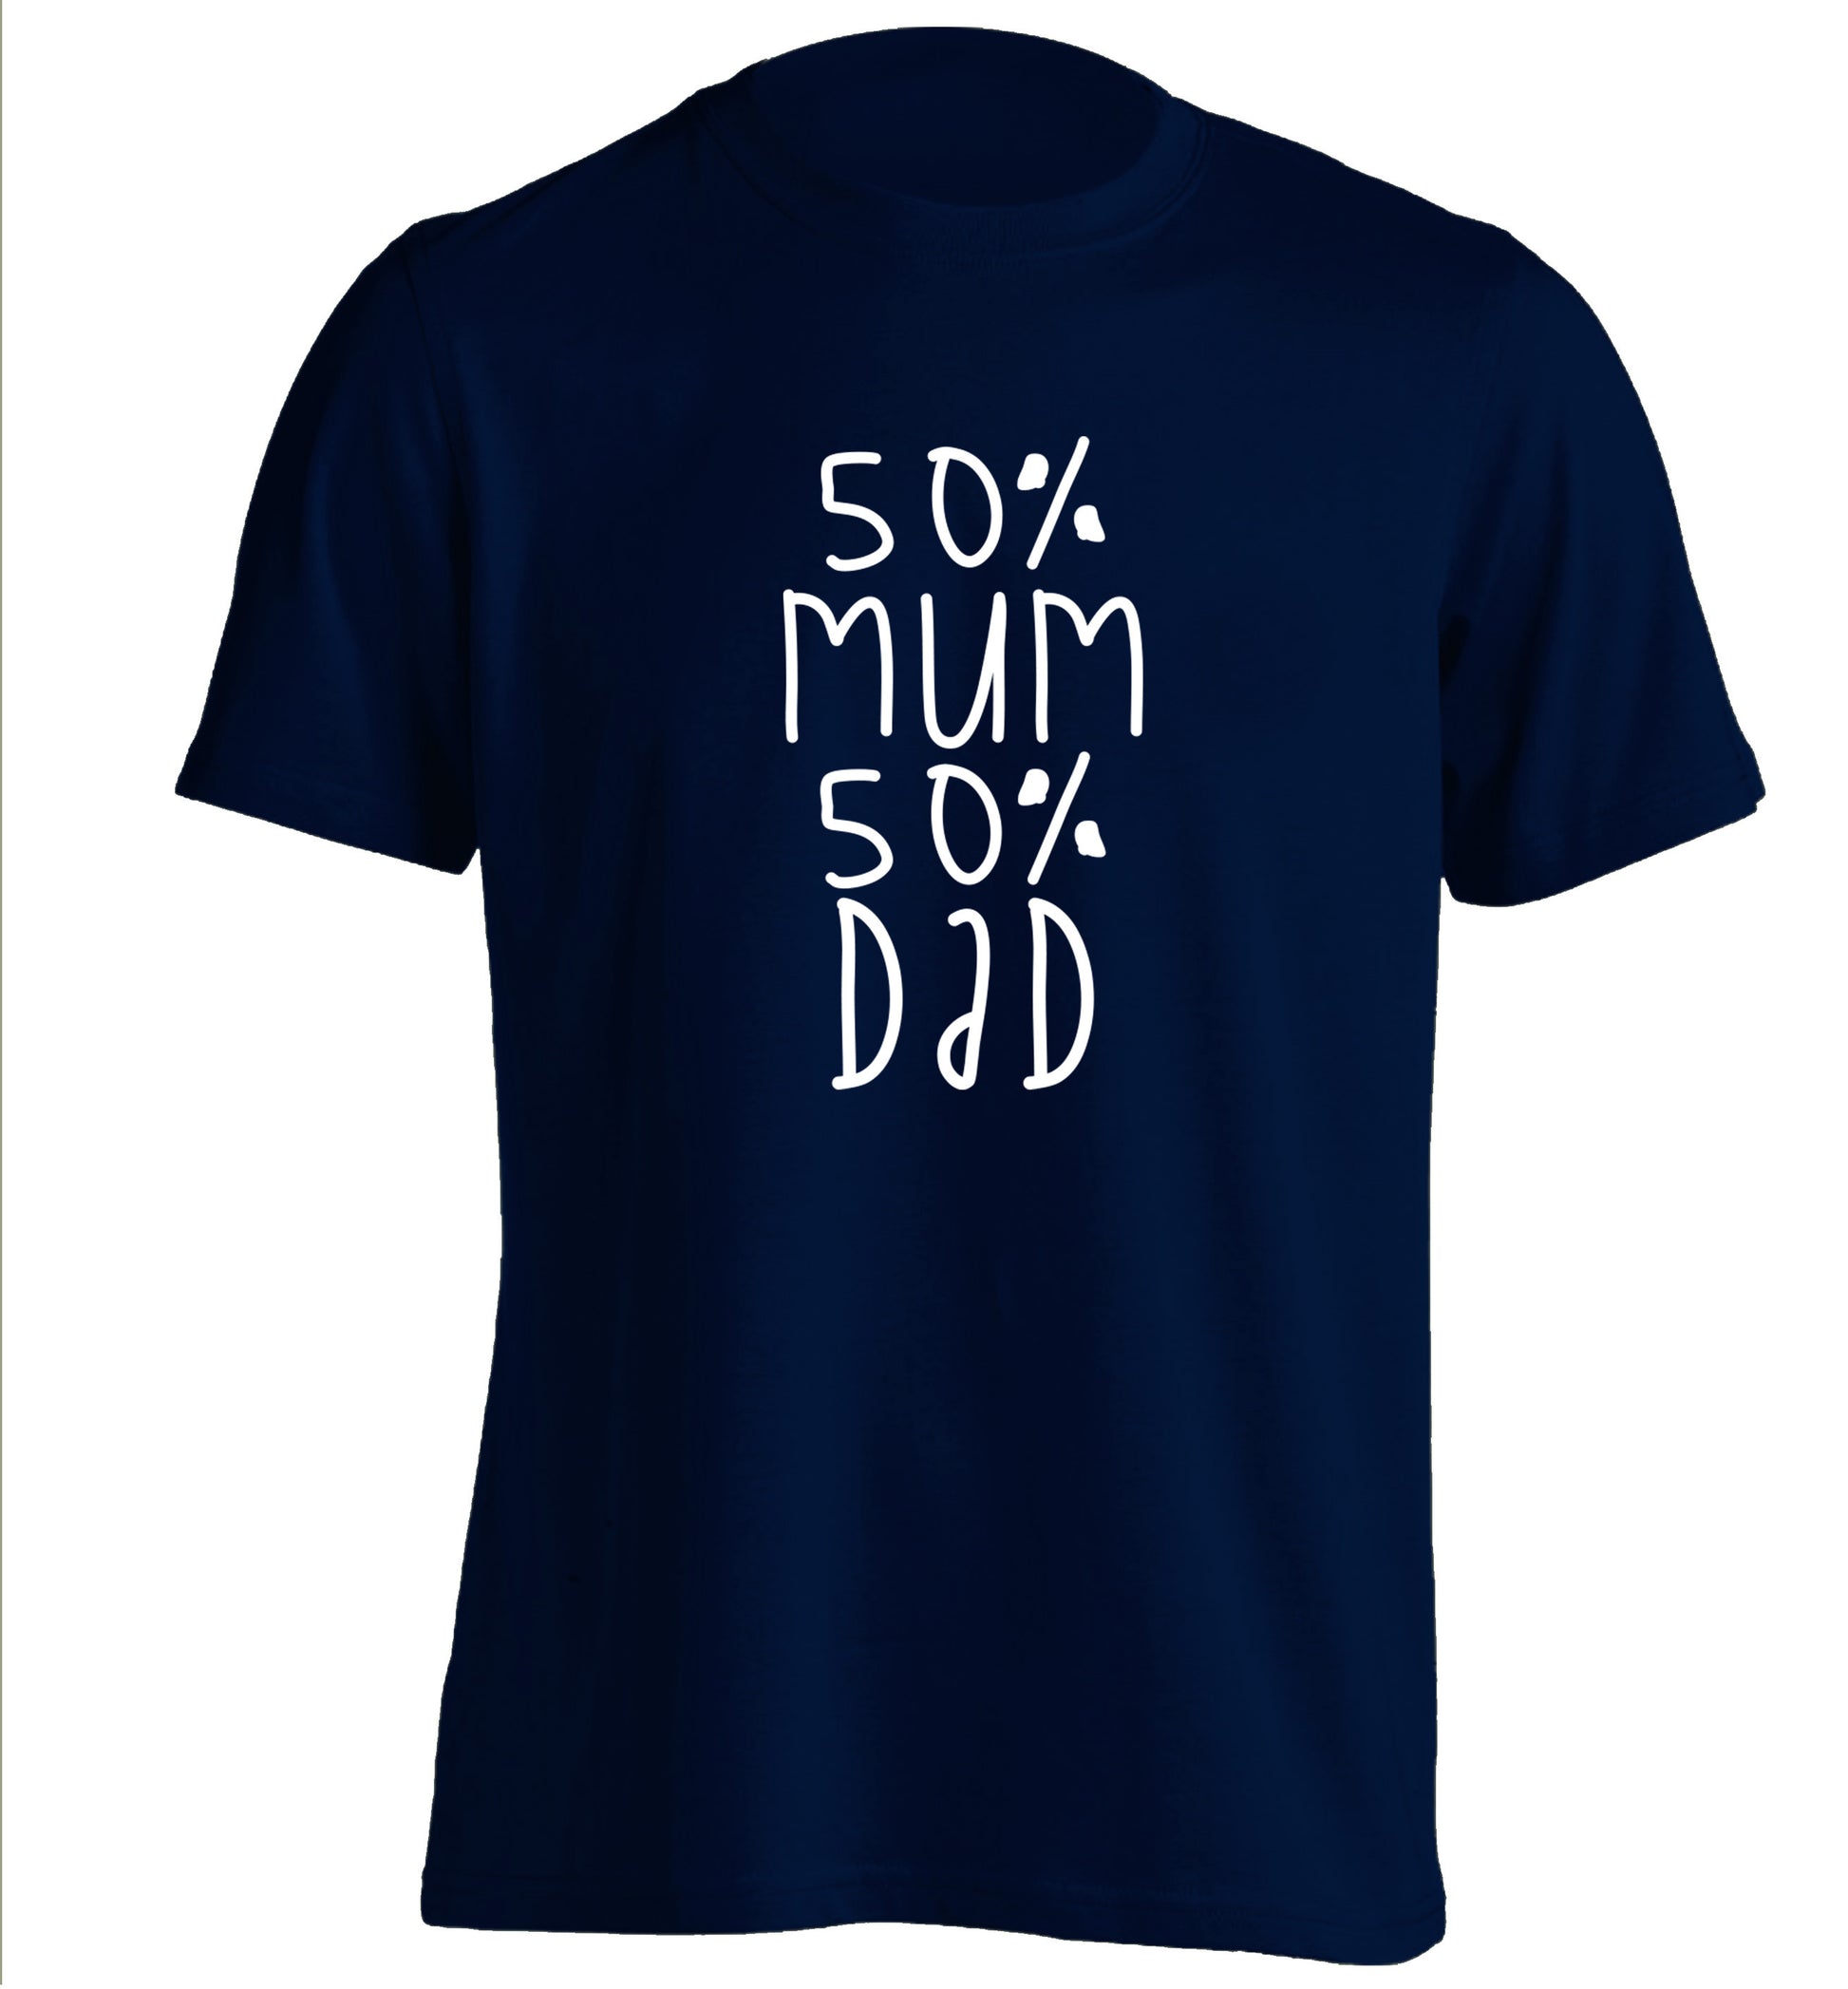 50% mum 50% dad adults unisex navy Tshirt 2XL